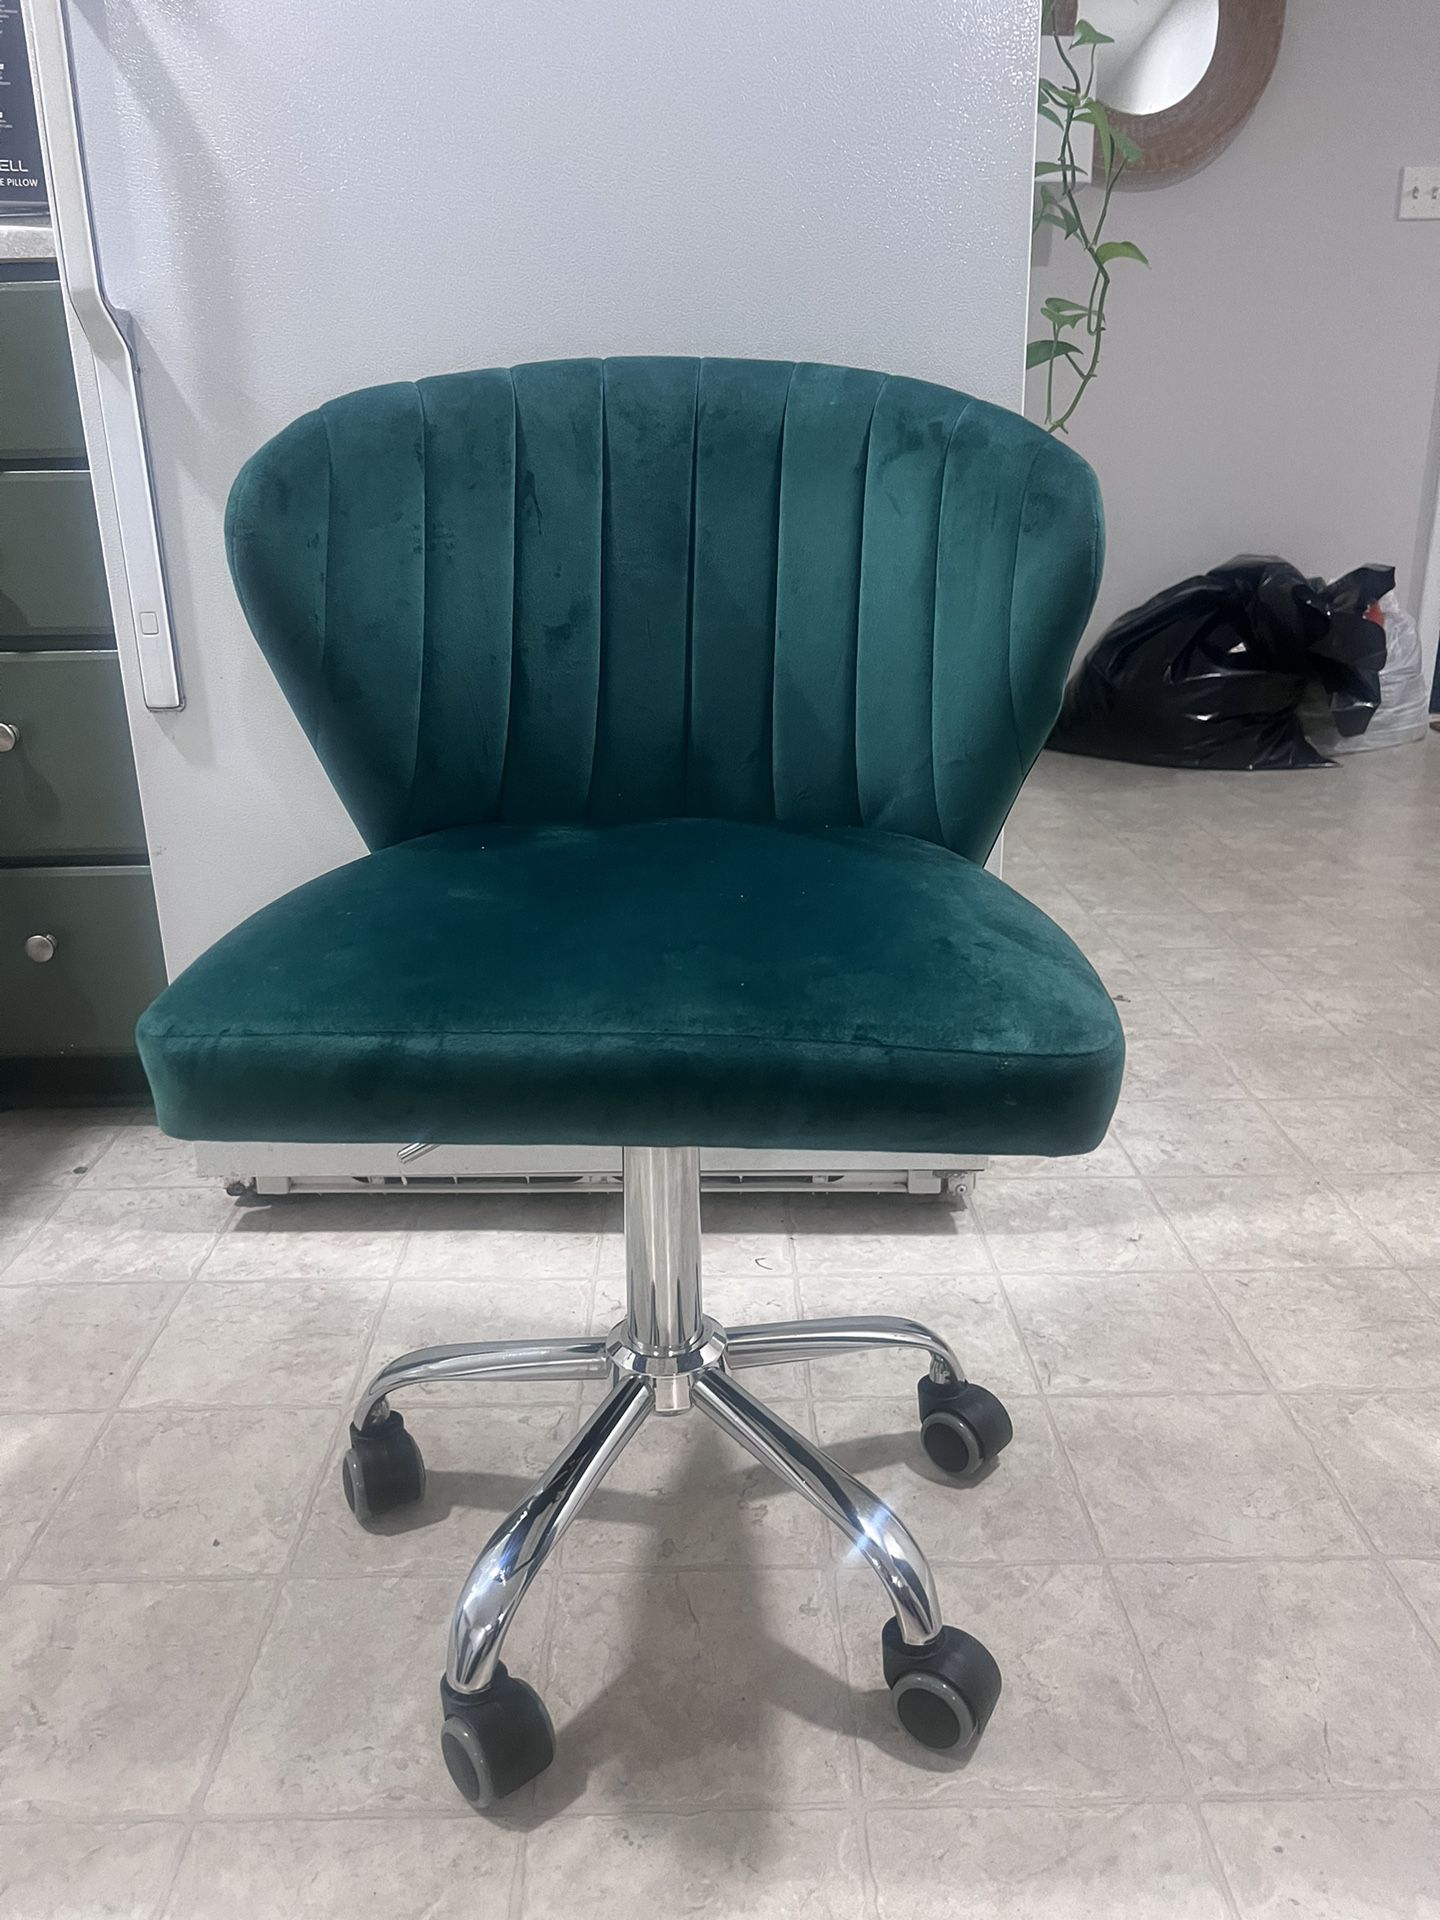 LIKE NEW Green Office Desk chair